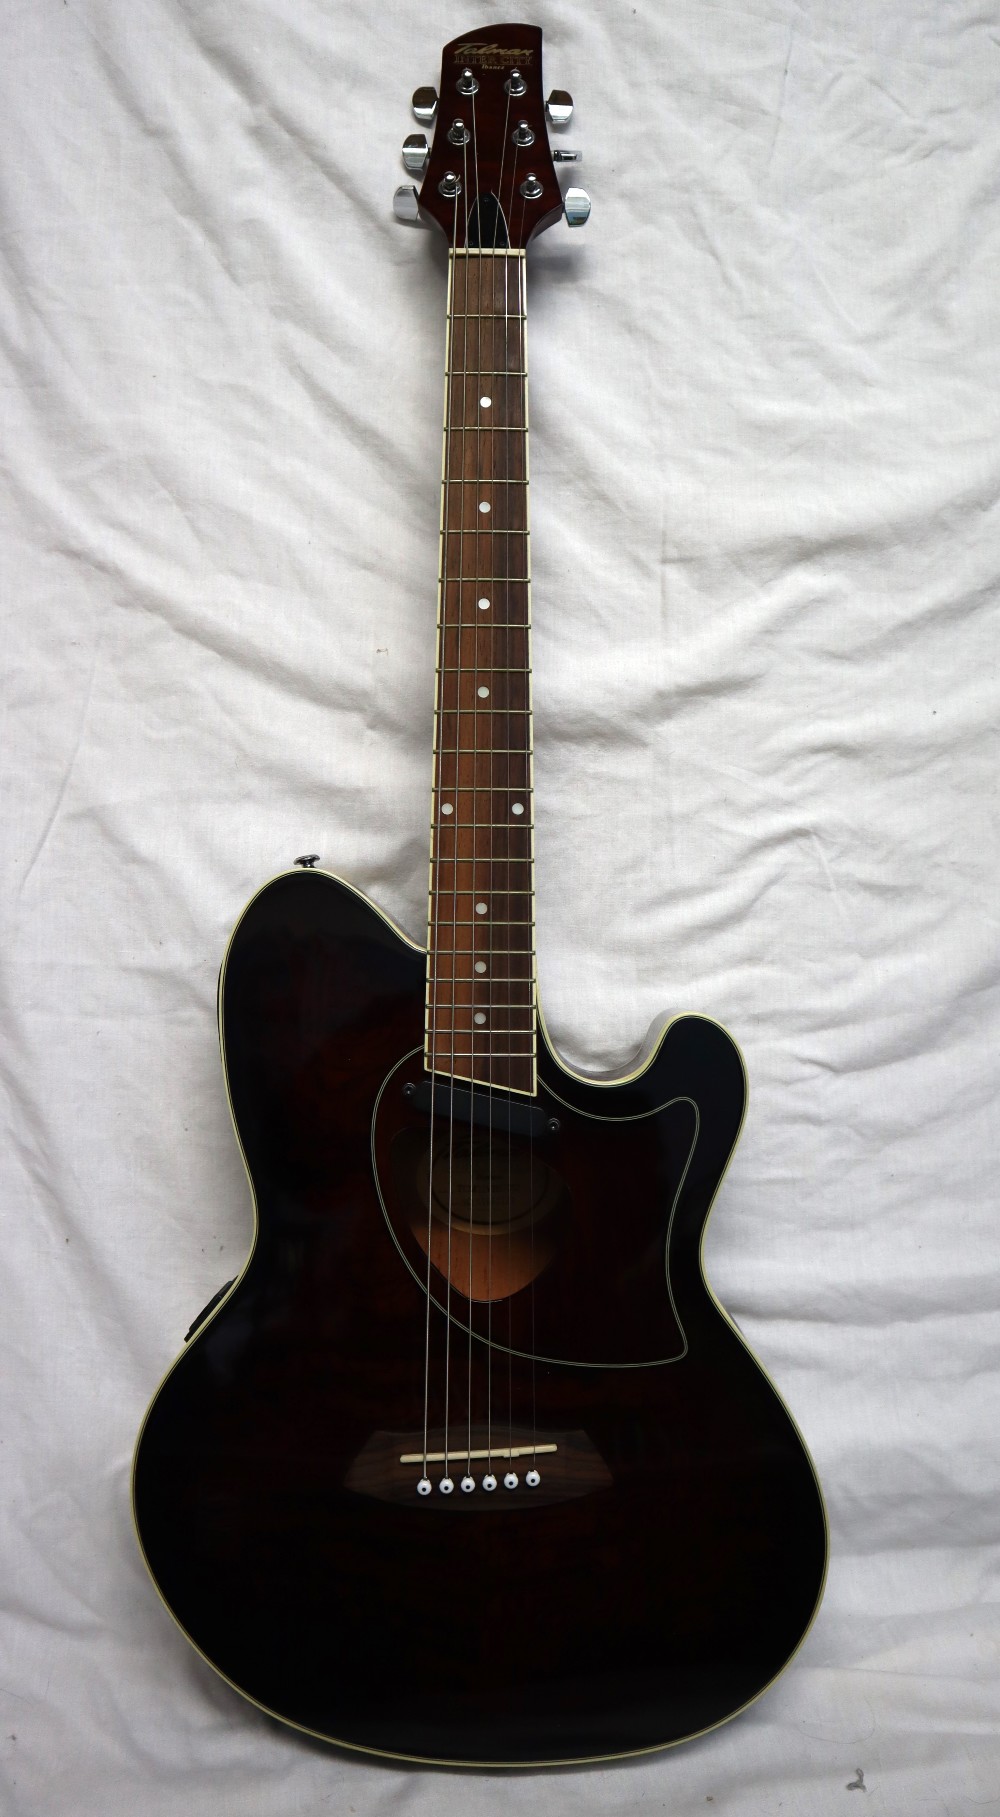 A Talman Inter City Ibanez six string guitar, Model No TCM50VBS 1203, No. - Image 8 of 14